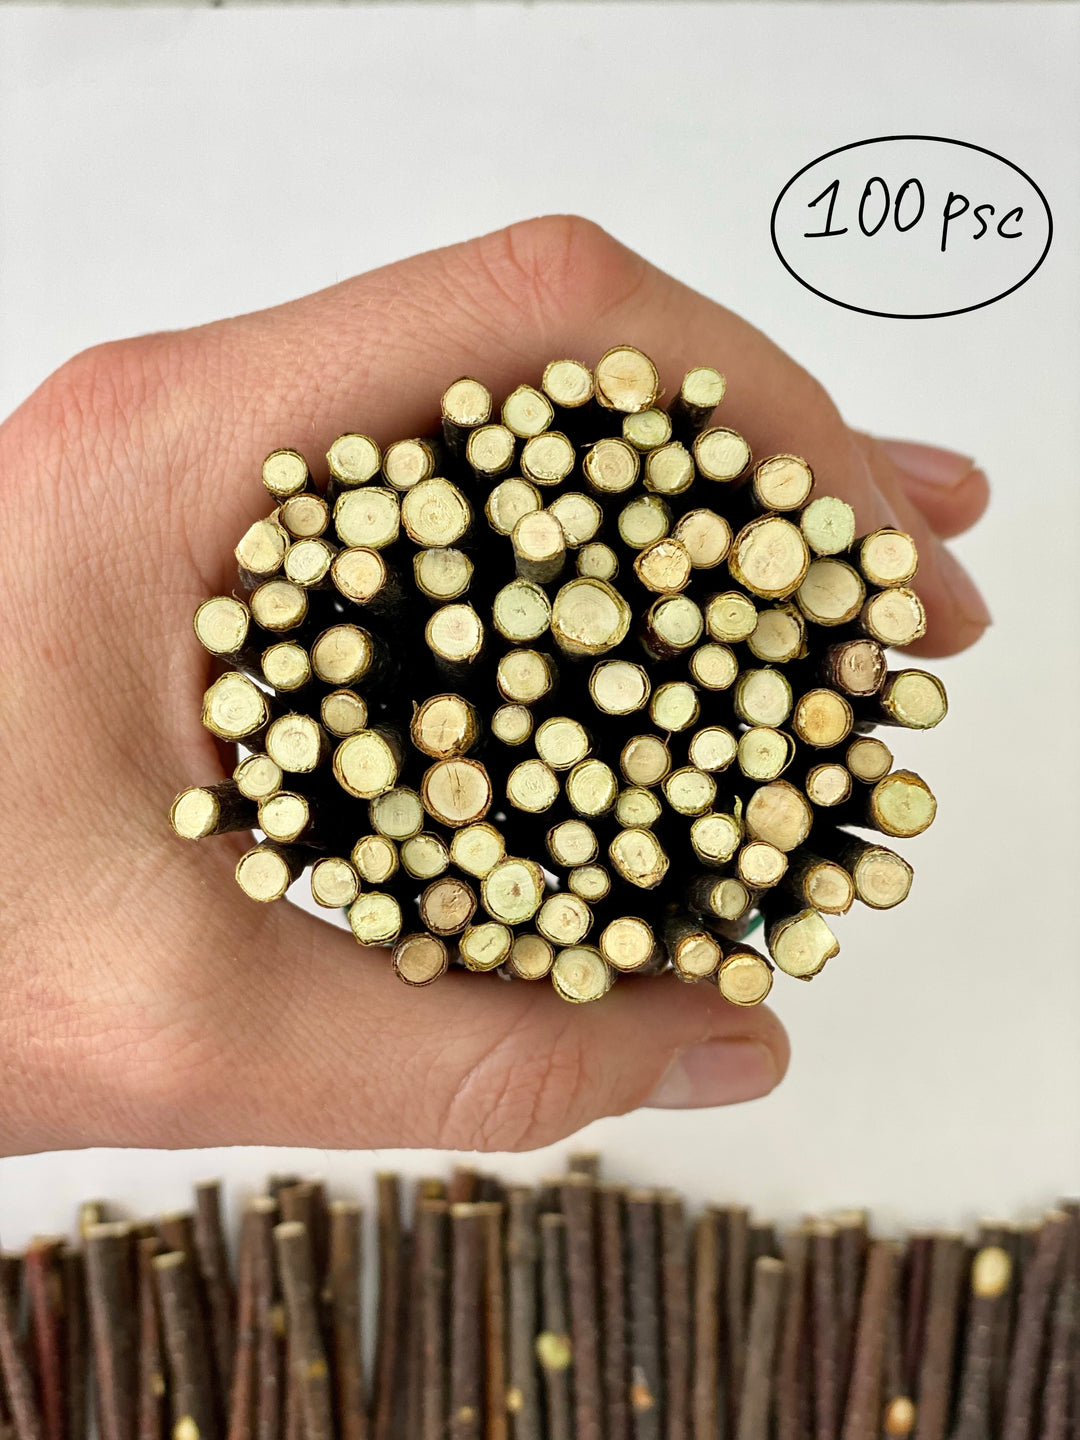 Wood Craft Sticks Natural 100 Pack